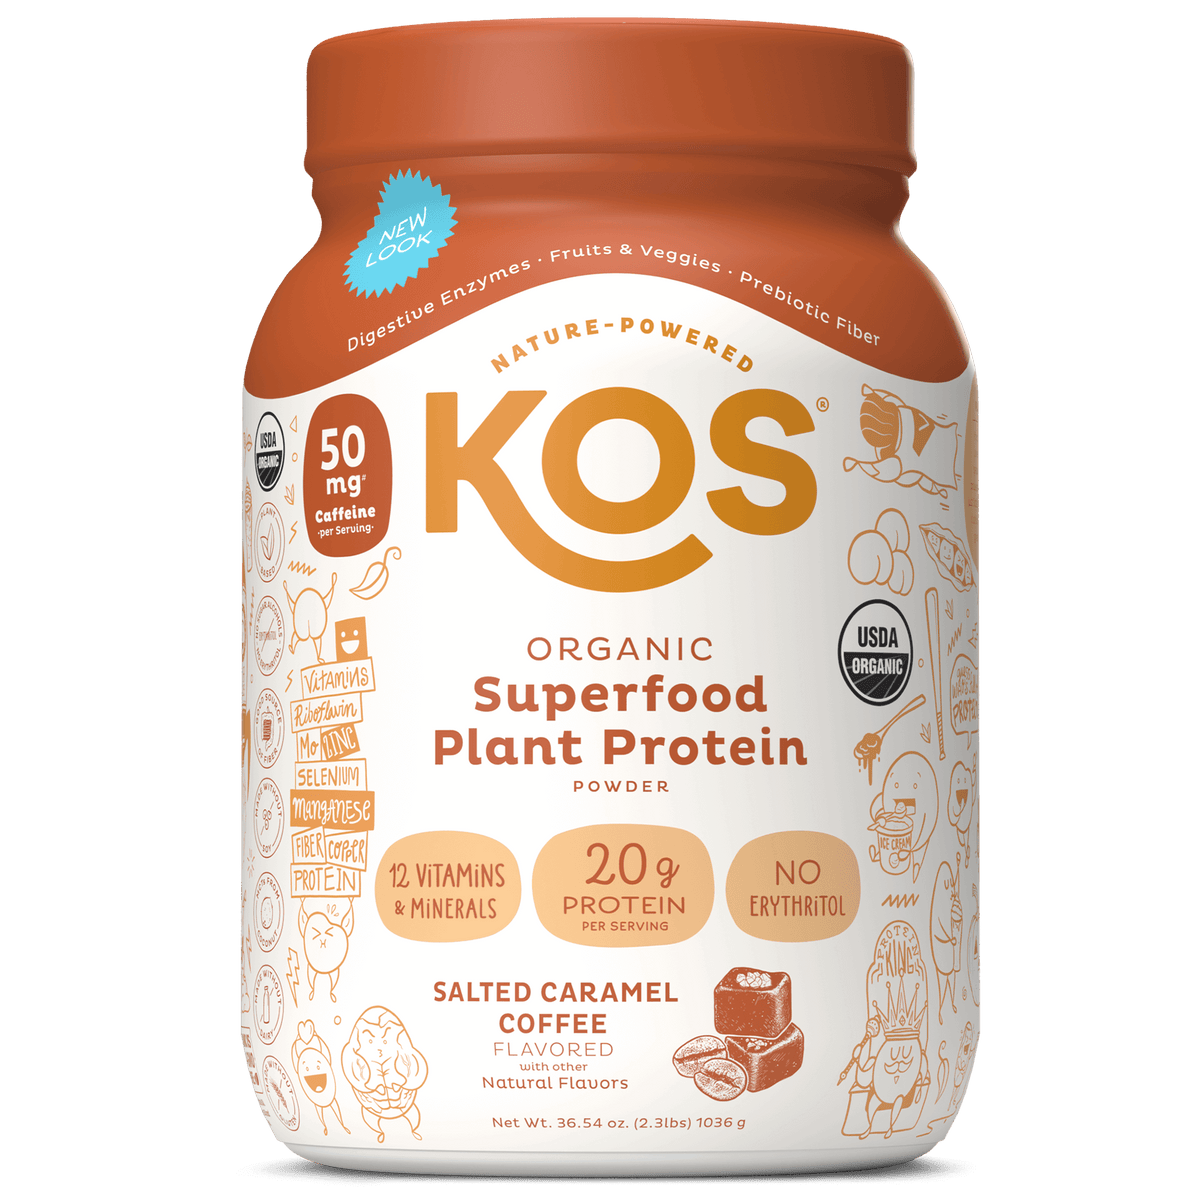 KOS Organic Plant Protein, Salted Caramel Coffee, 28 servings by KOS.com